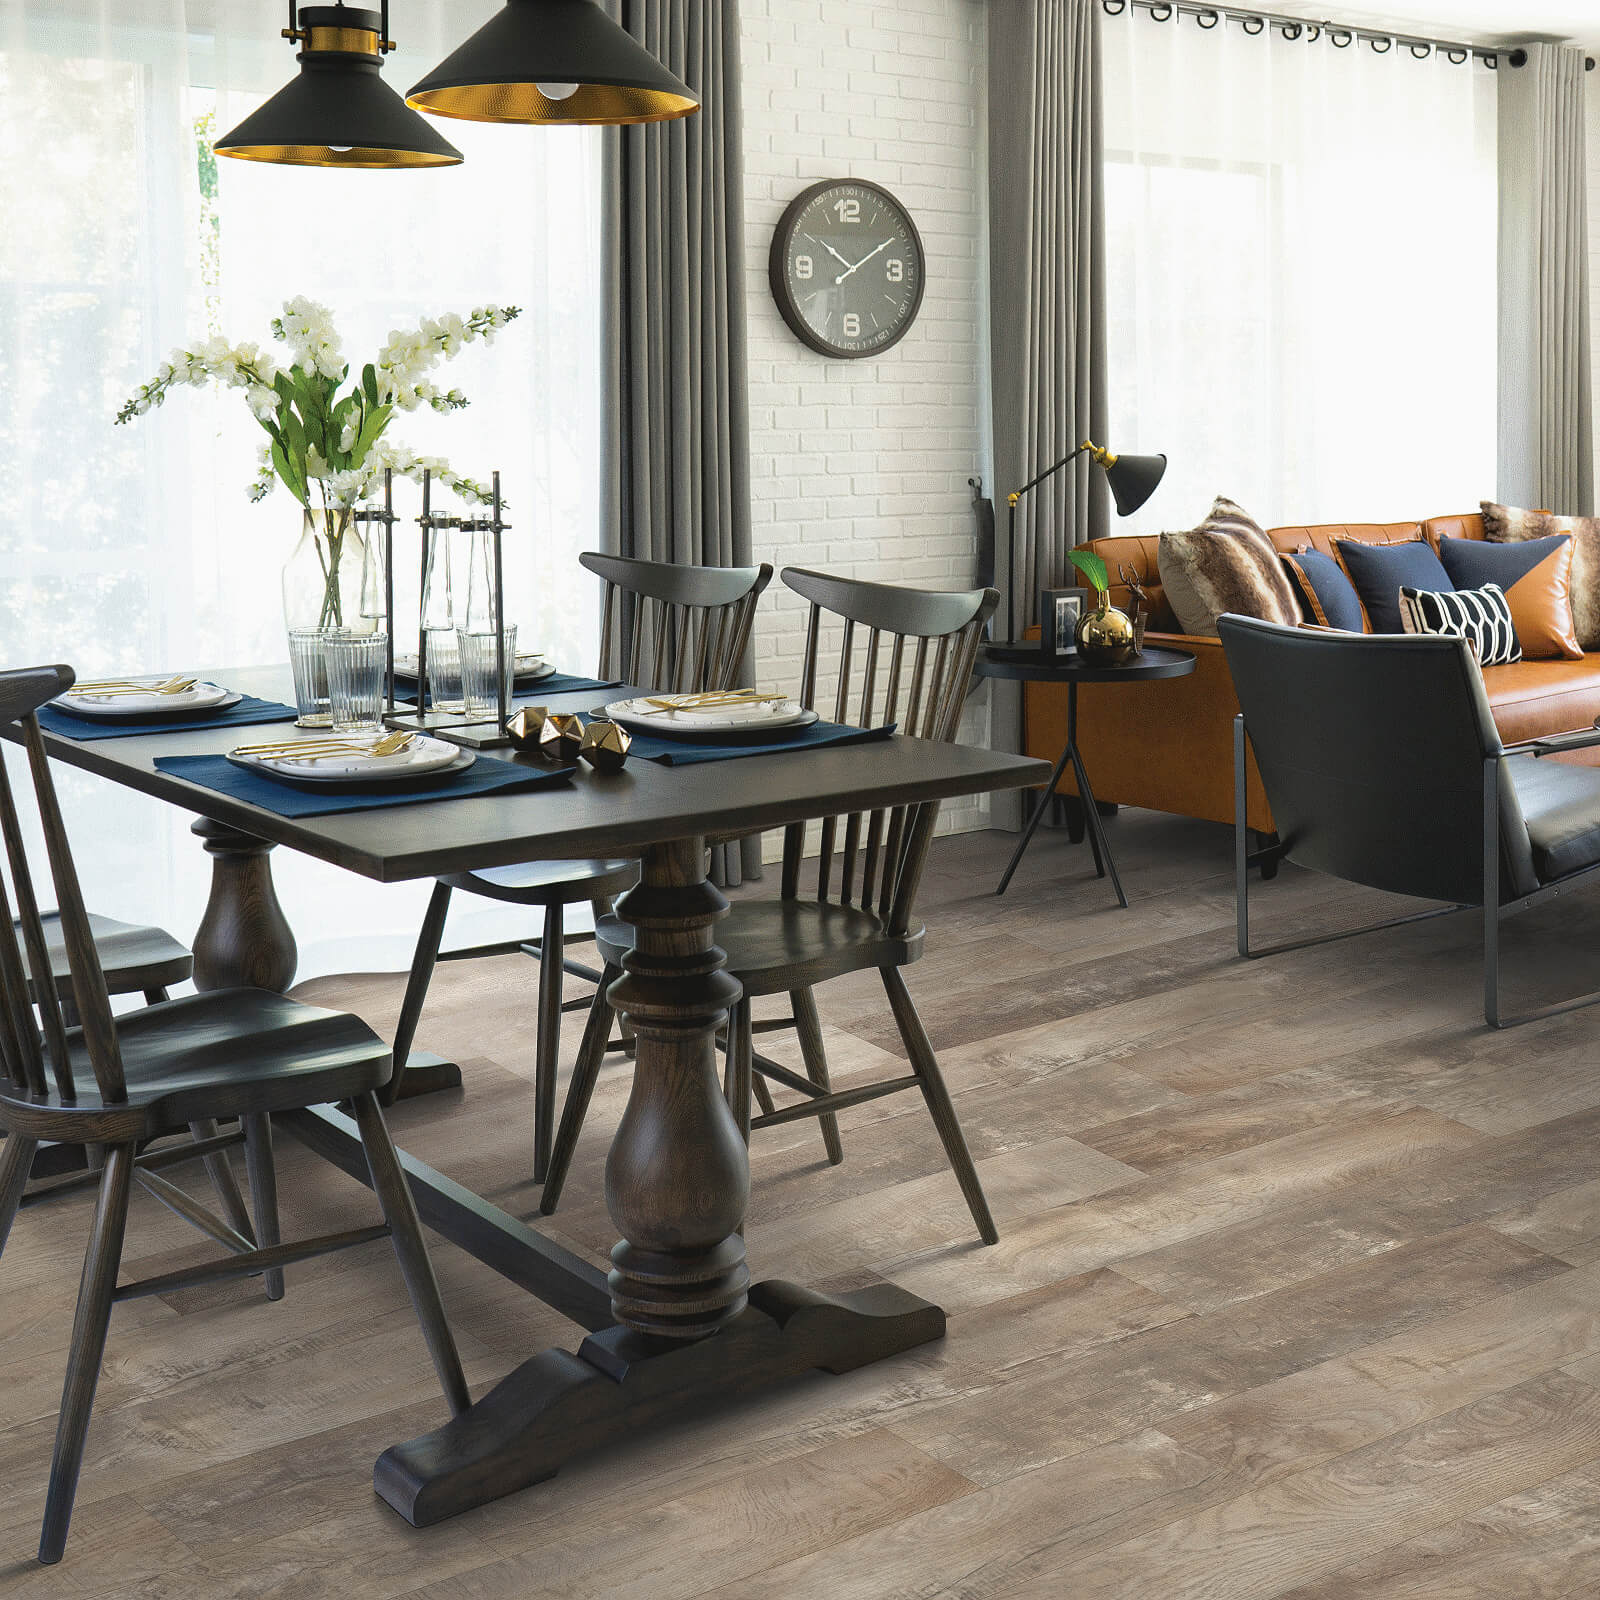 Vinyl flooring for dining area | Wellston Decorating Center, Inc.